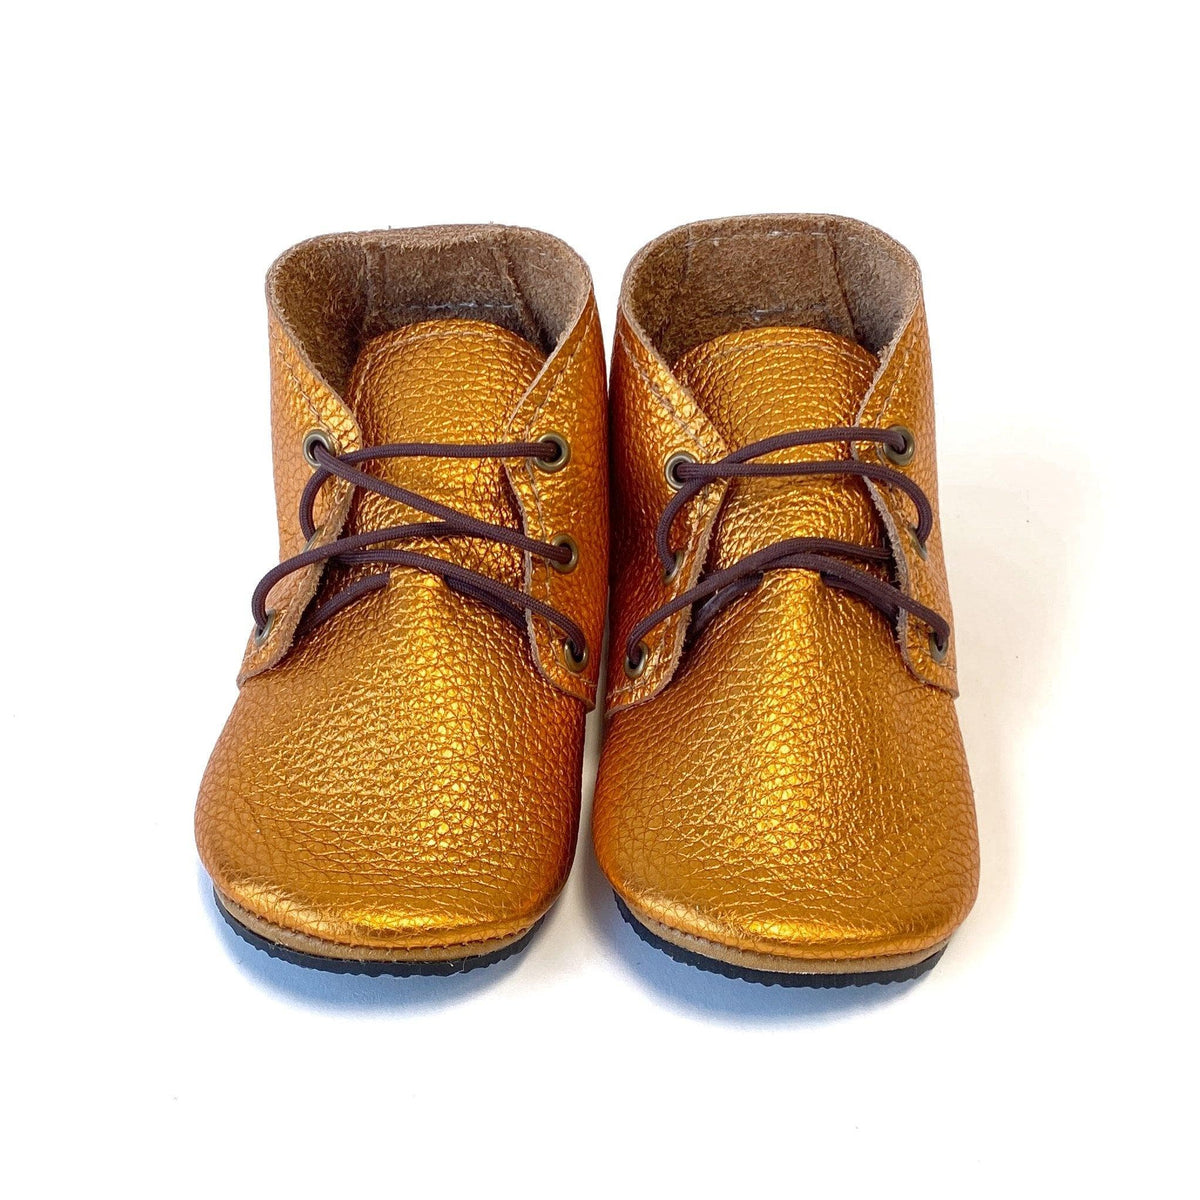 Duchess and Fox Tangerine Oxfords handmade barefoot shoes